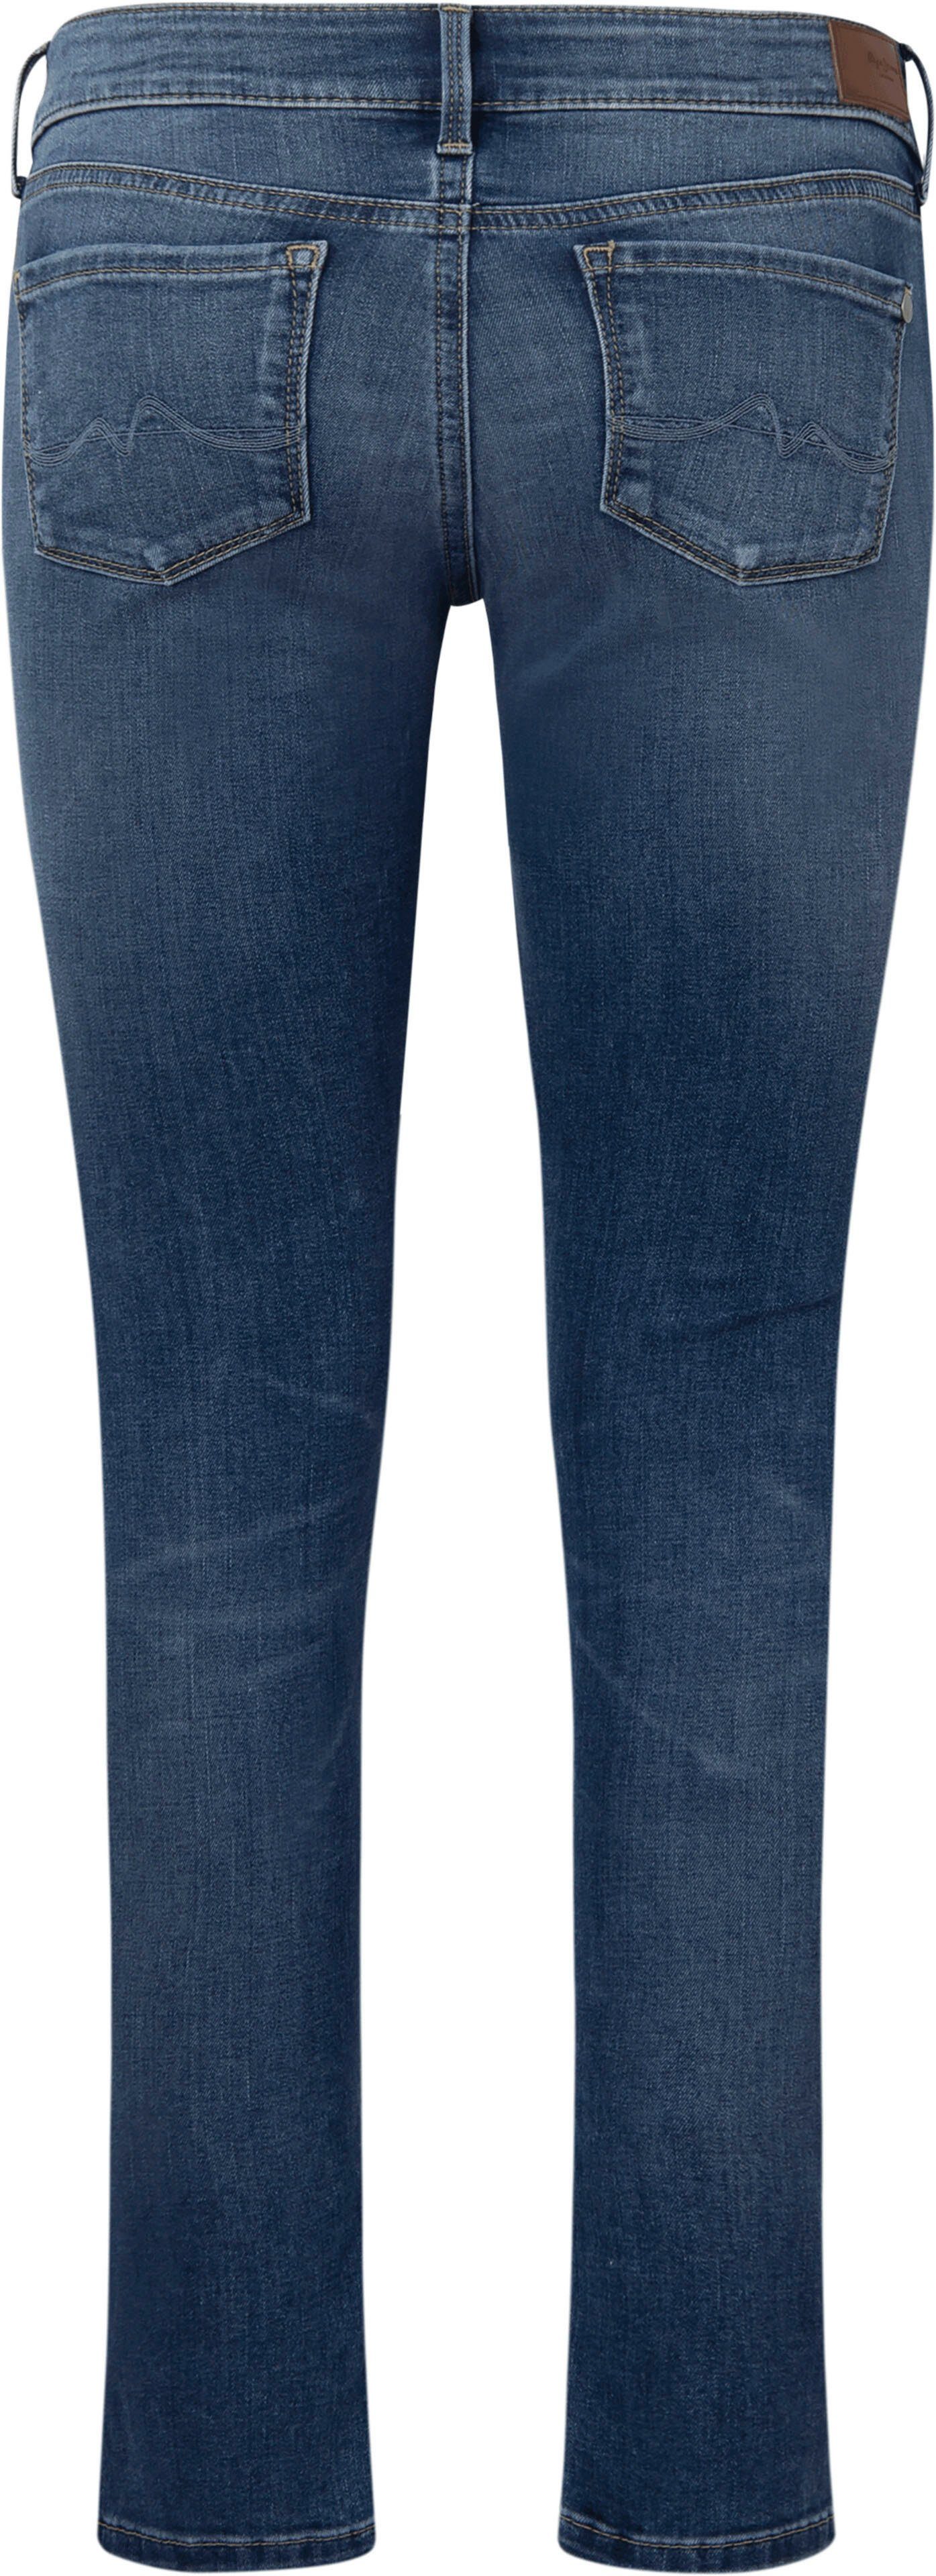 SOHO im 1-Knopf blue Bund mit und Stretch-Anteil Jeans Pepe Skinny-fit-Jeans 5-Pocket-Stil